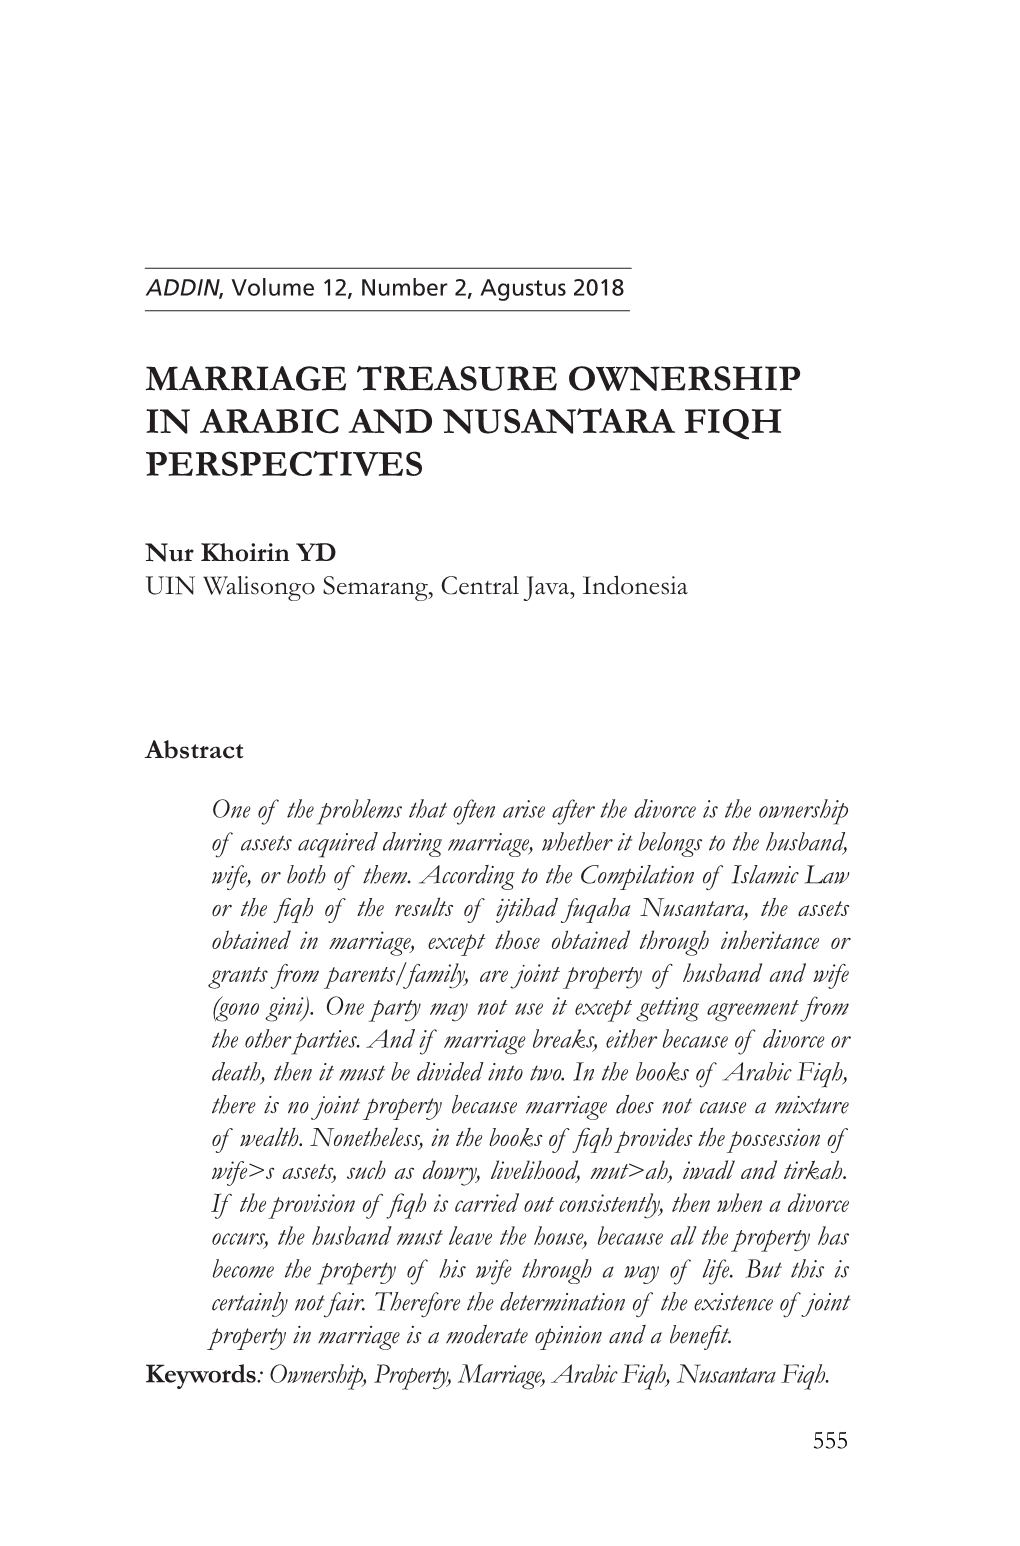 Marriage Treasure Ownership in Arabic and Nusantara Fiqh Perspectives